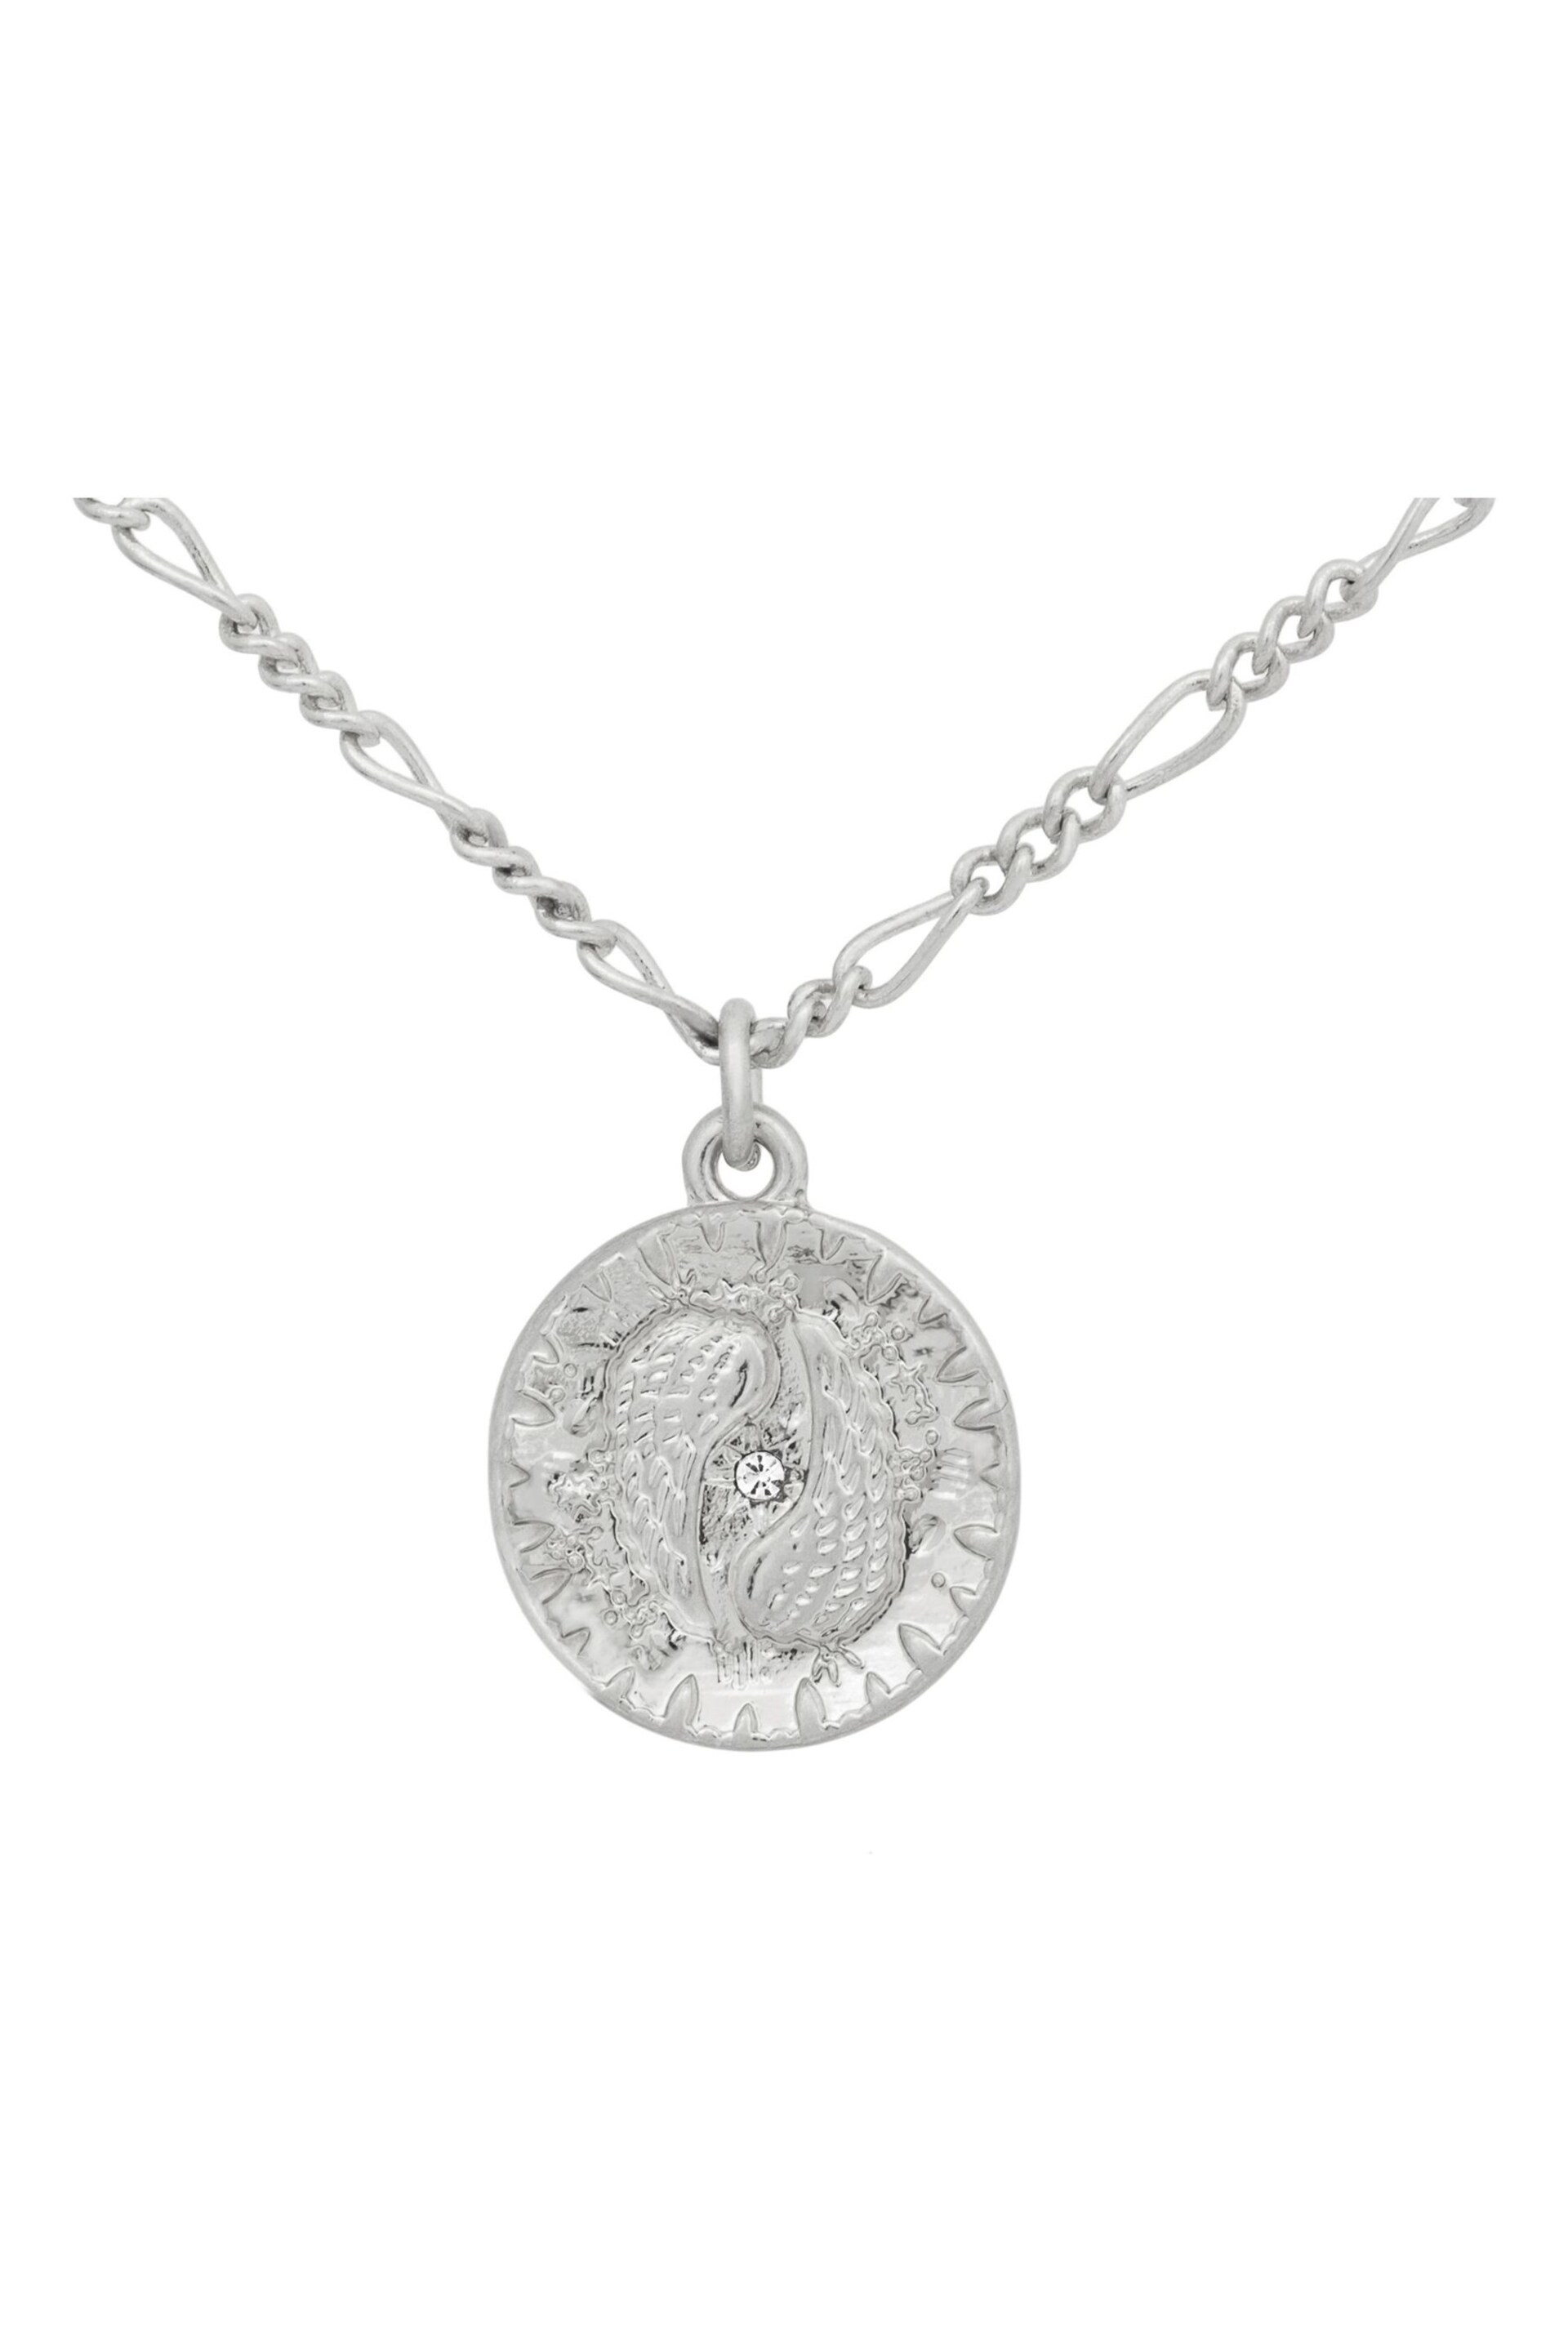 Bibi Bijoux Silver Tone Serenity Layered Charm Necklace - Image 3 of 4